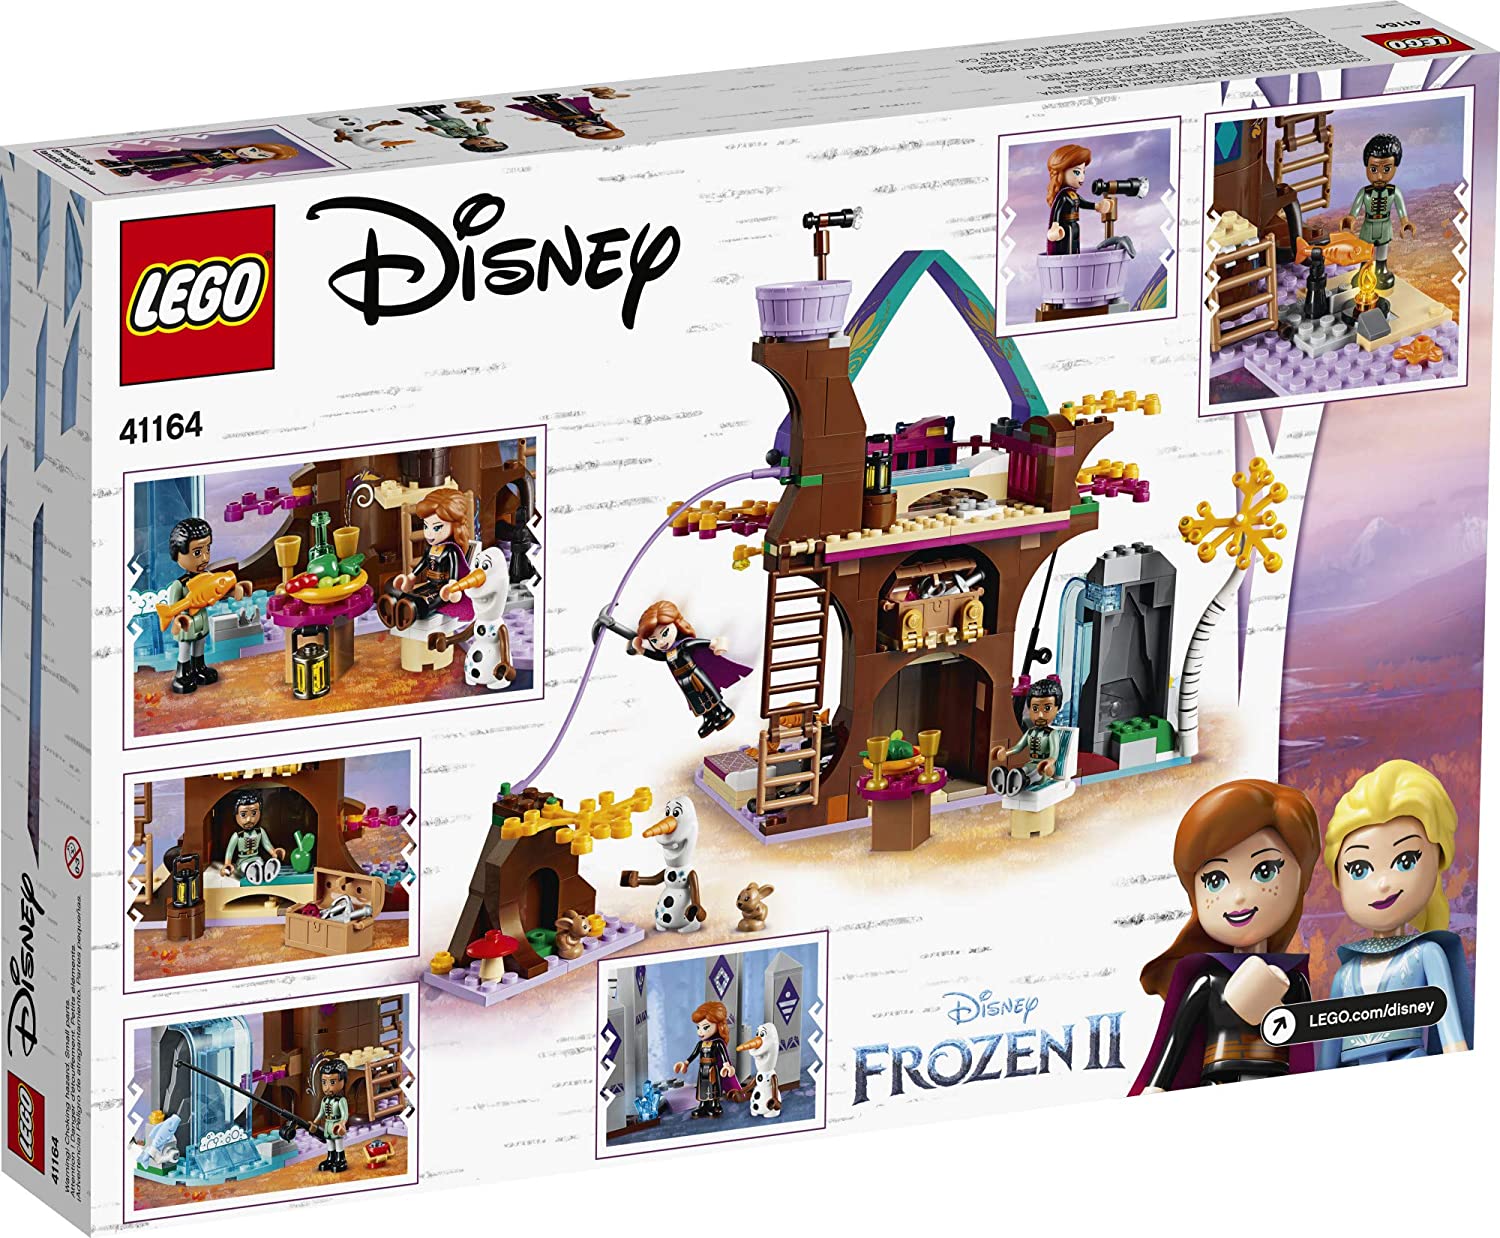 LEGO Aged 6 Plus Disney Frozen II Enchanted Treehouse Building Kit Of 302 Piece Sets